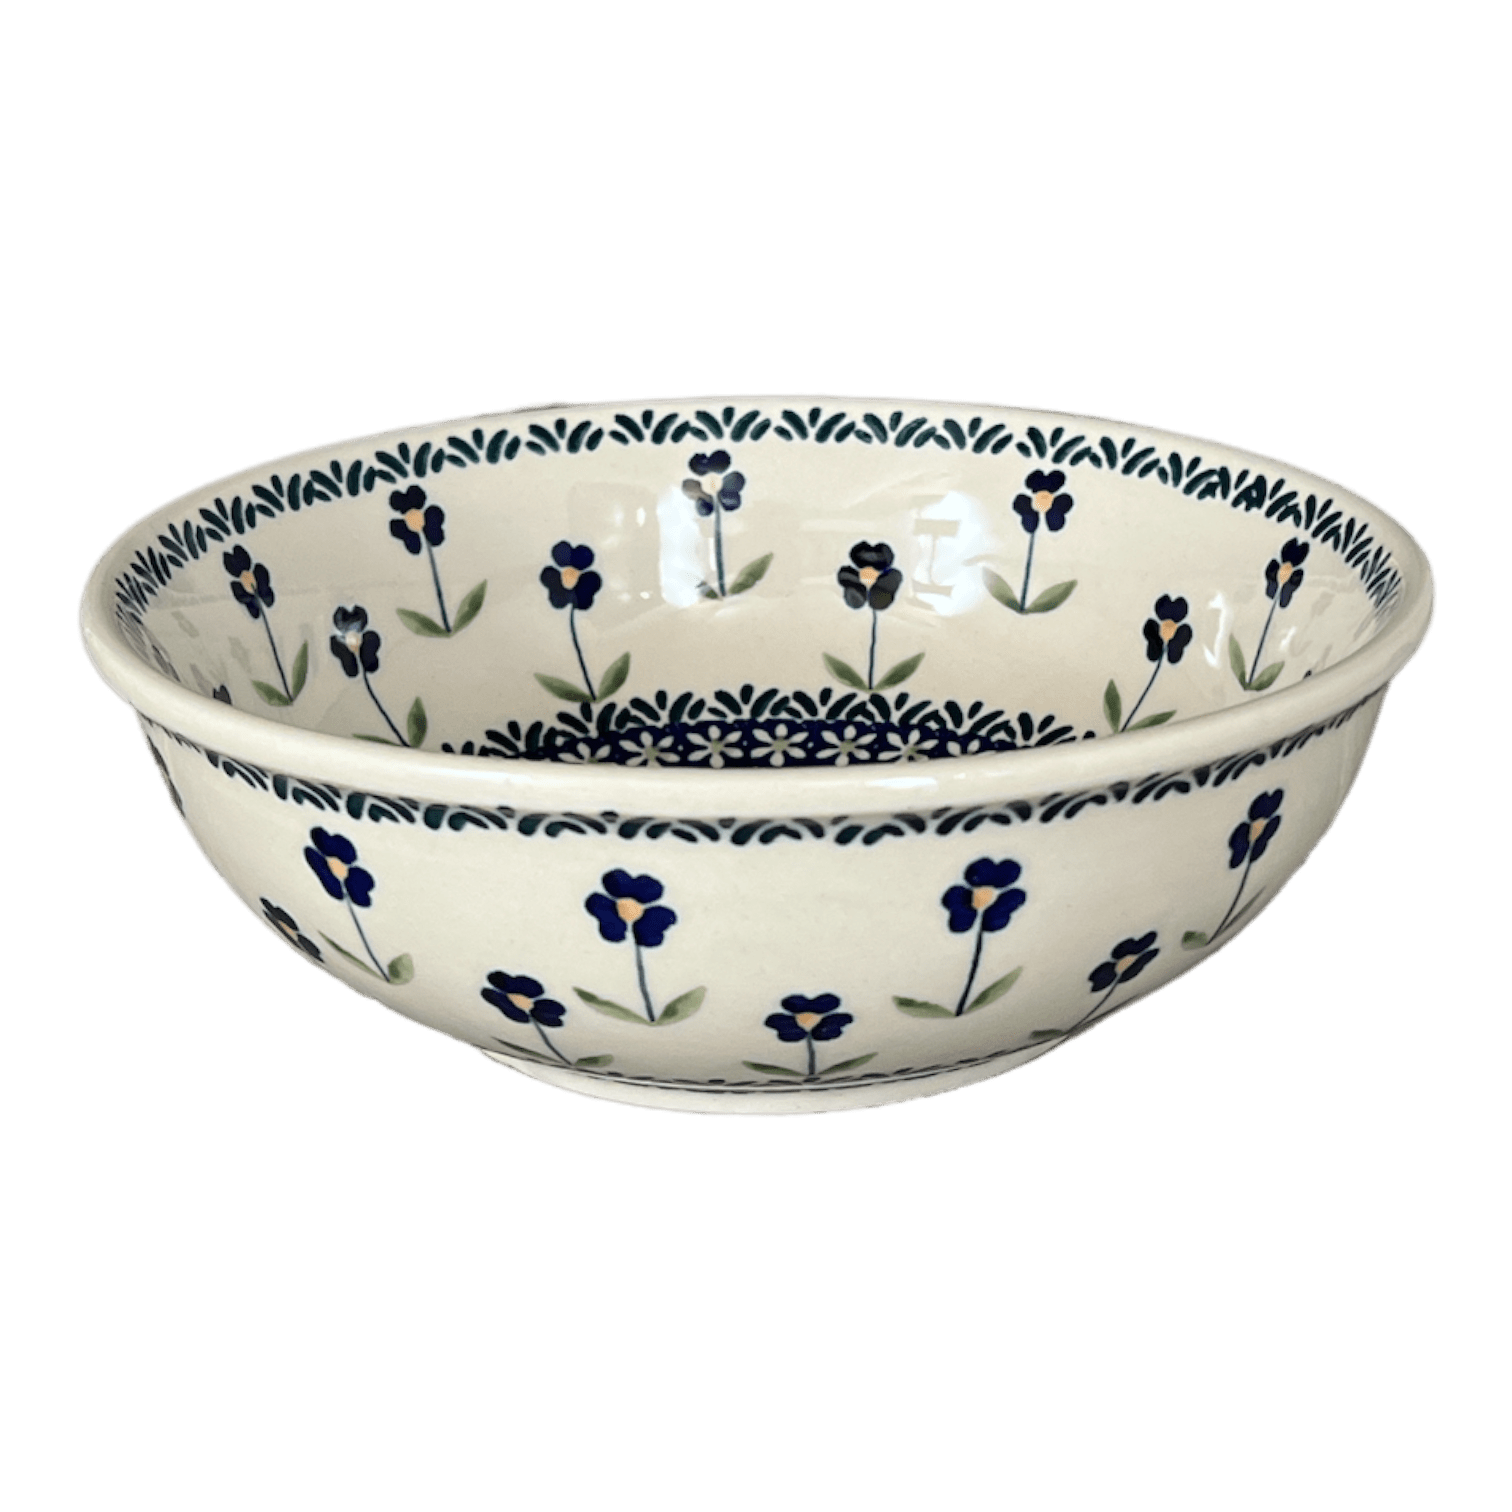 Ceramic Pistachio Bowl Lazy Bowl in a Bowl Combination Bowl